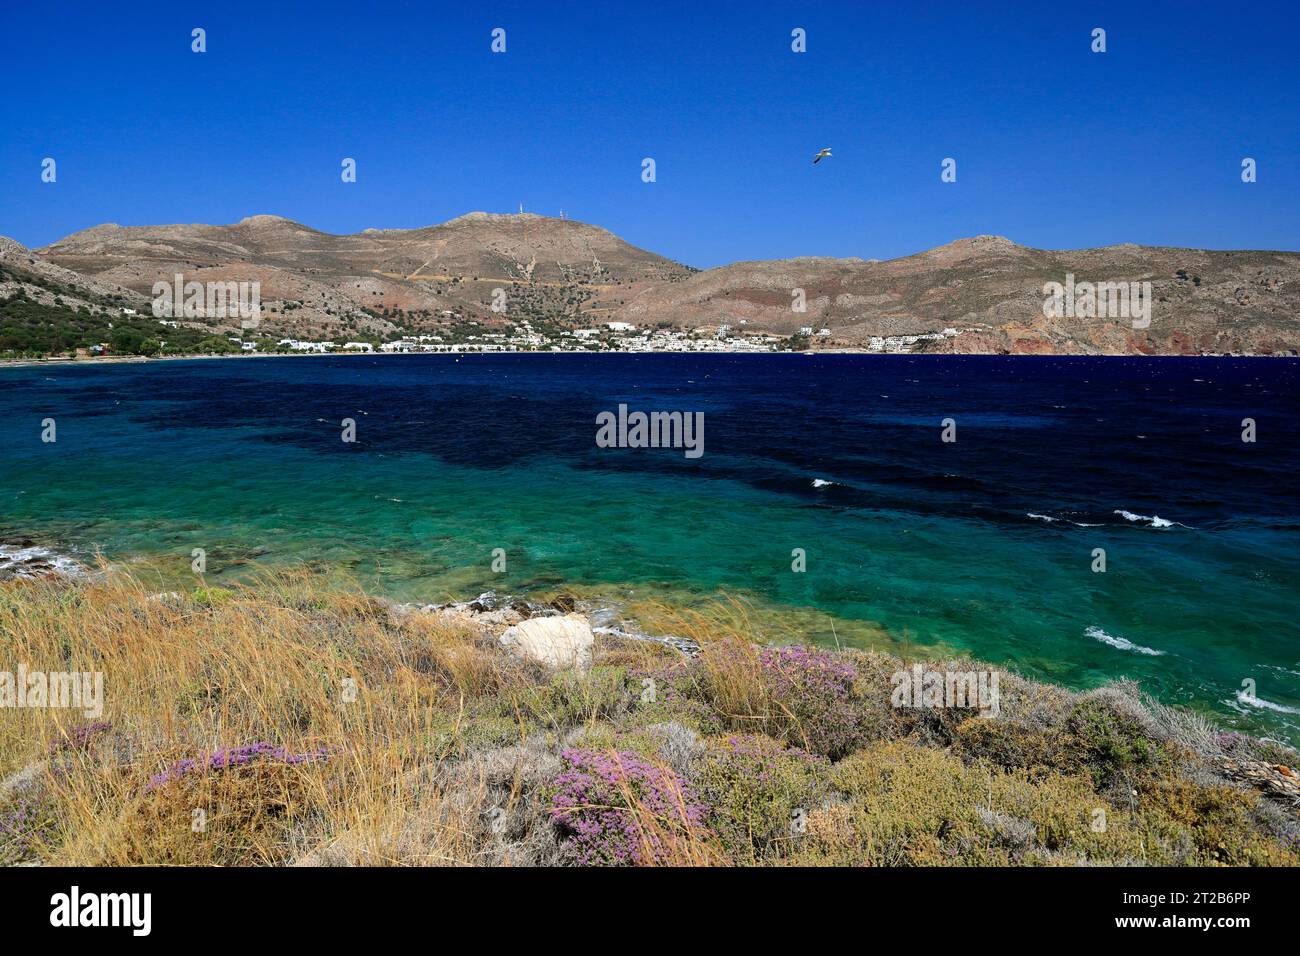 Livadia Bay, Tilos, Dodekanische Inseln, südliche Ägäis, Griechenland. Stockfoto